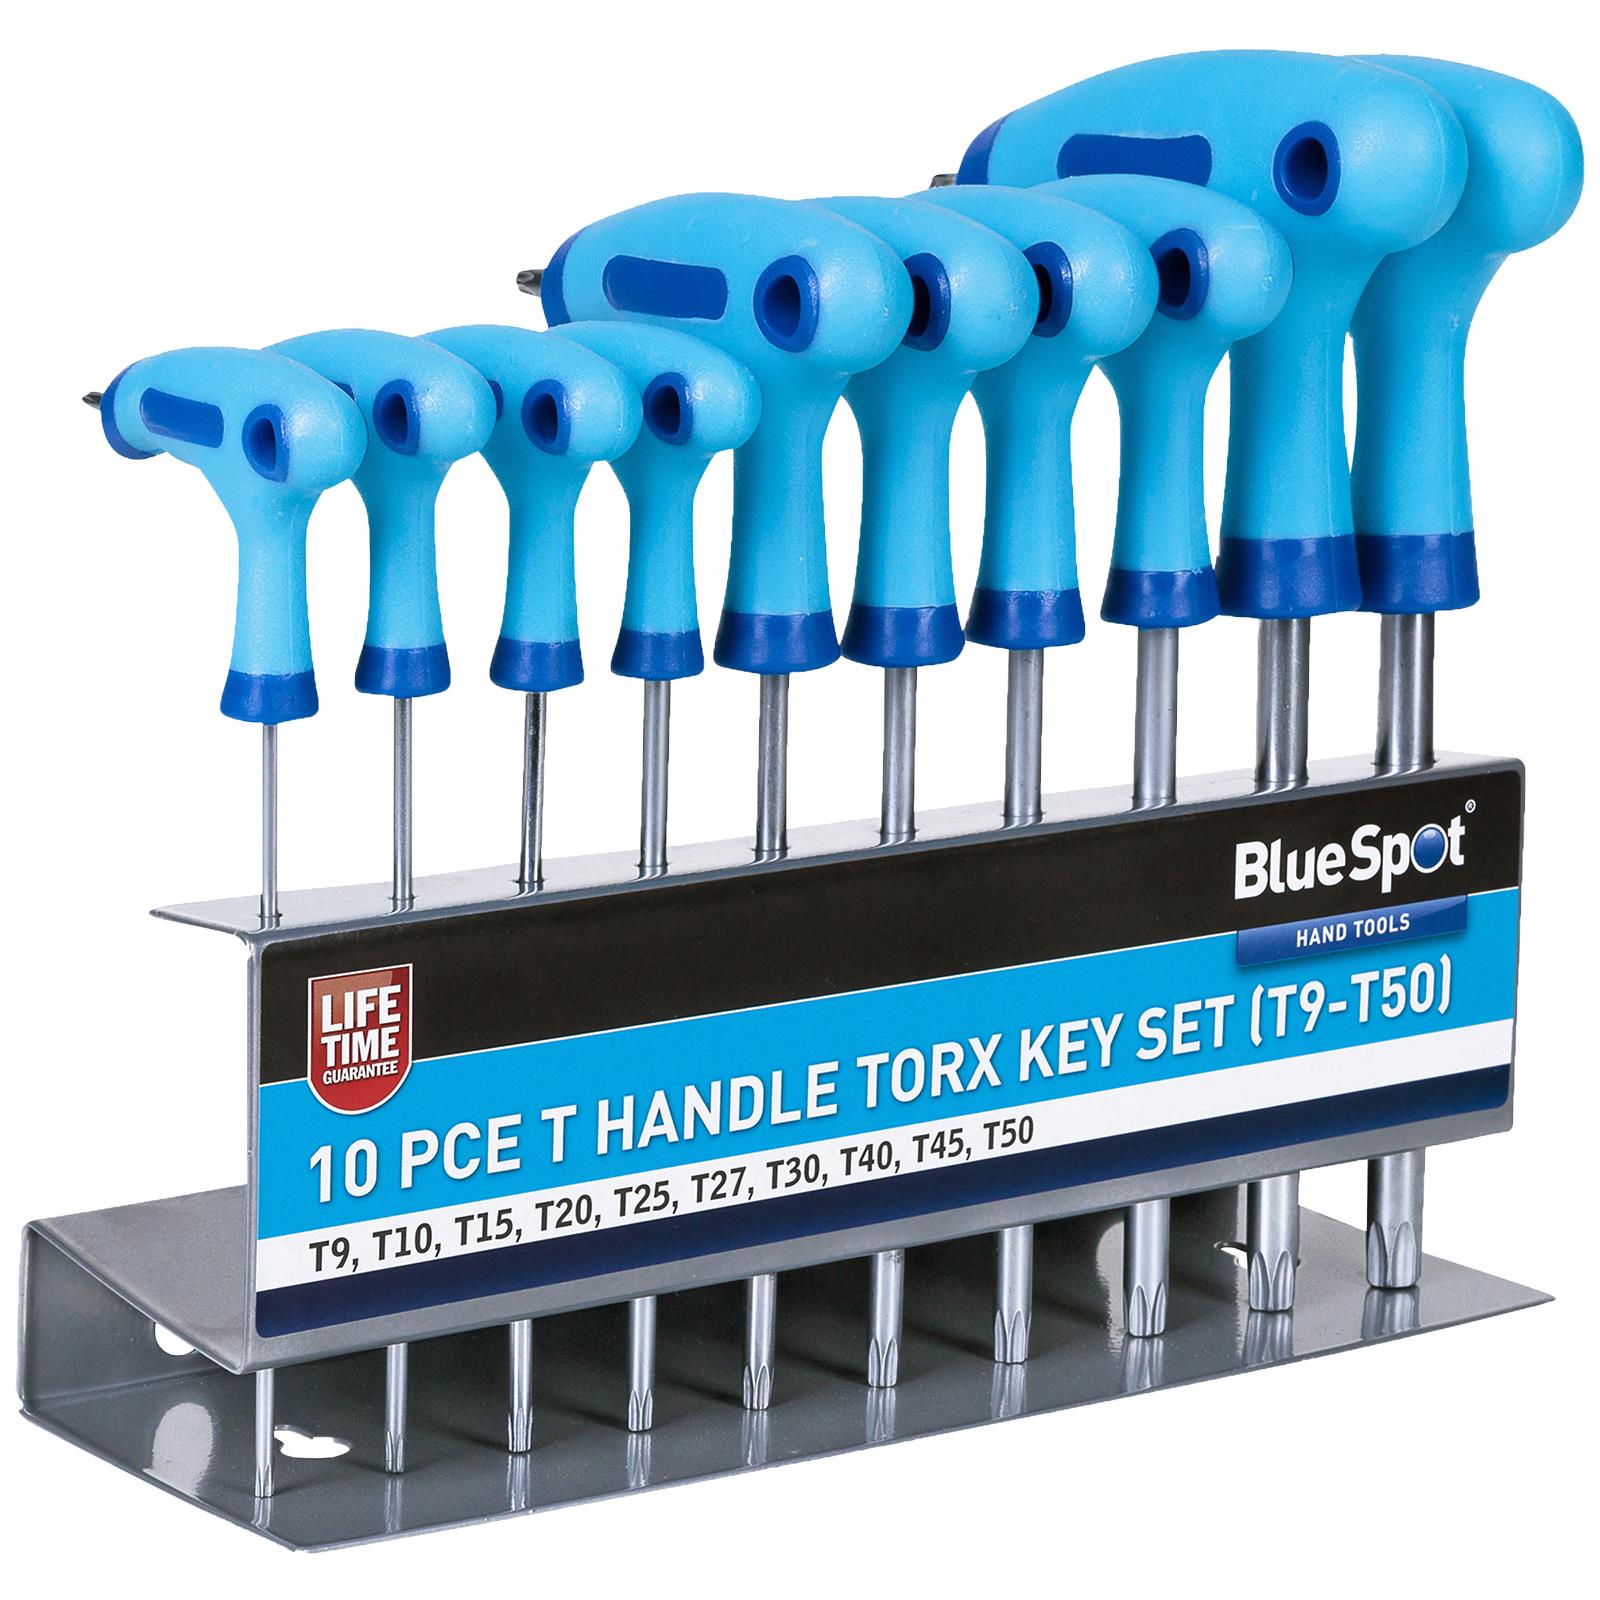 BlueSpot T-Handle Torx Key Set 10 Piece T9-T50